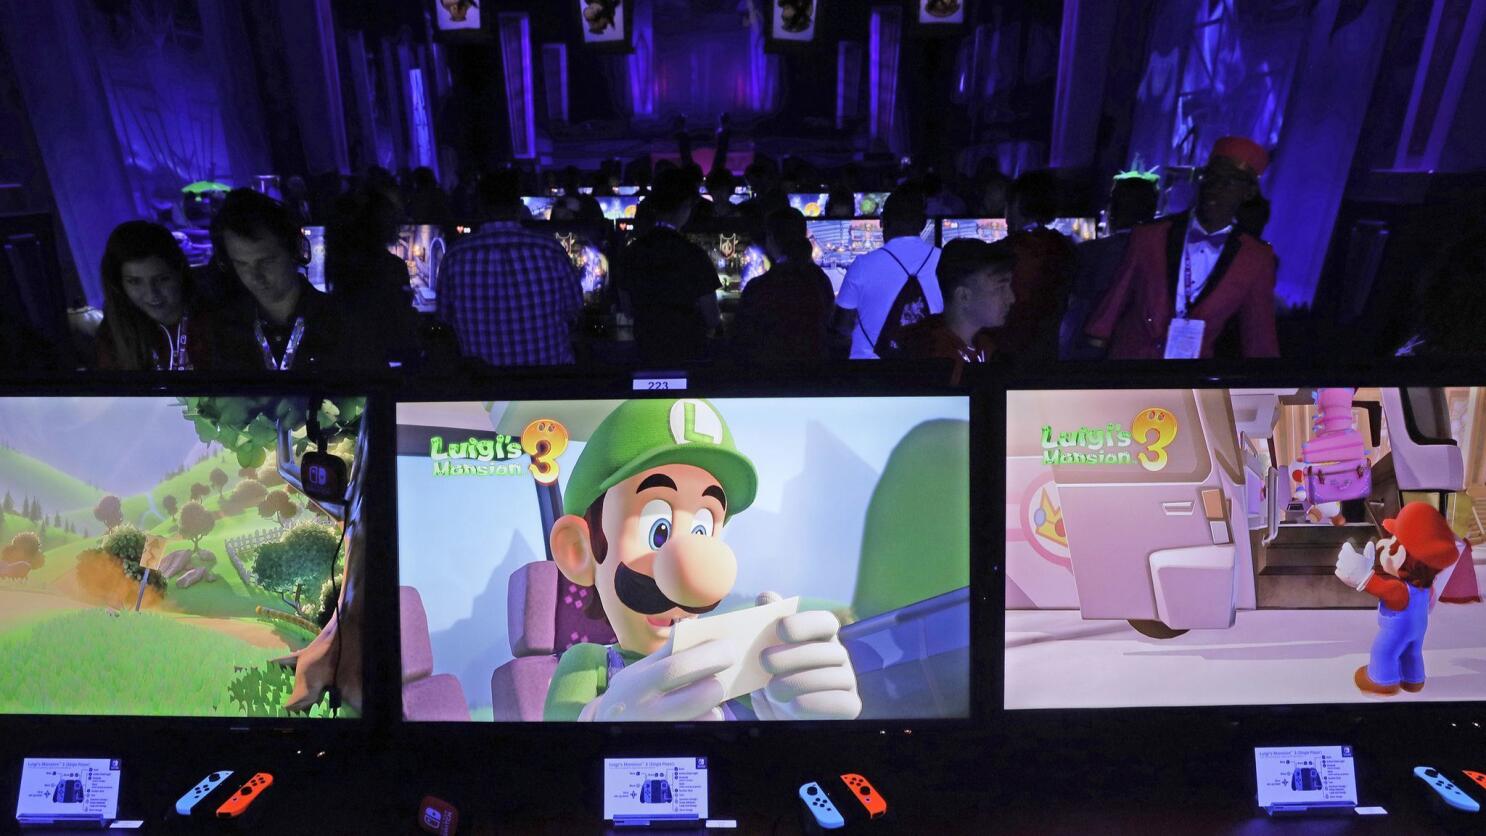 Nintendo 3DS Luigi's Mansion Video Games for sale